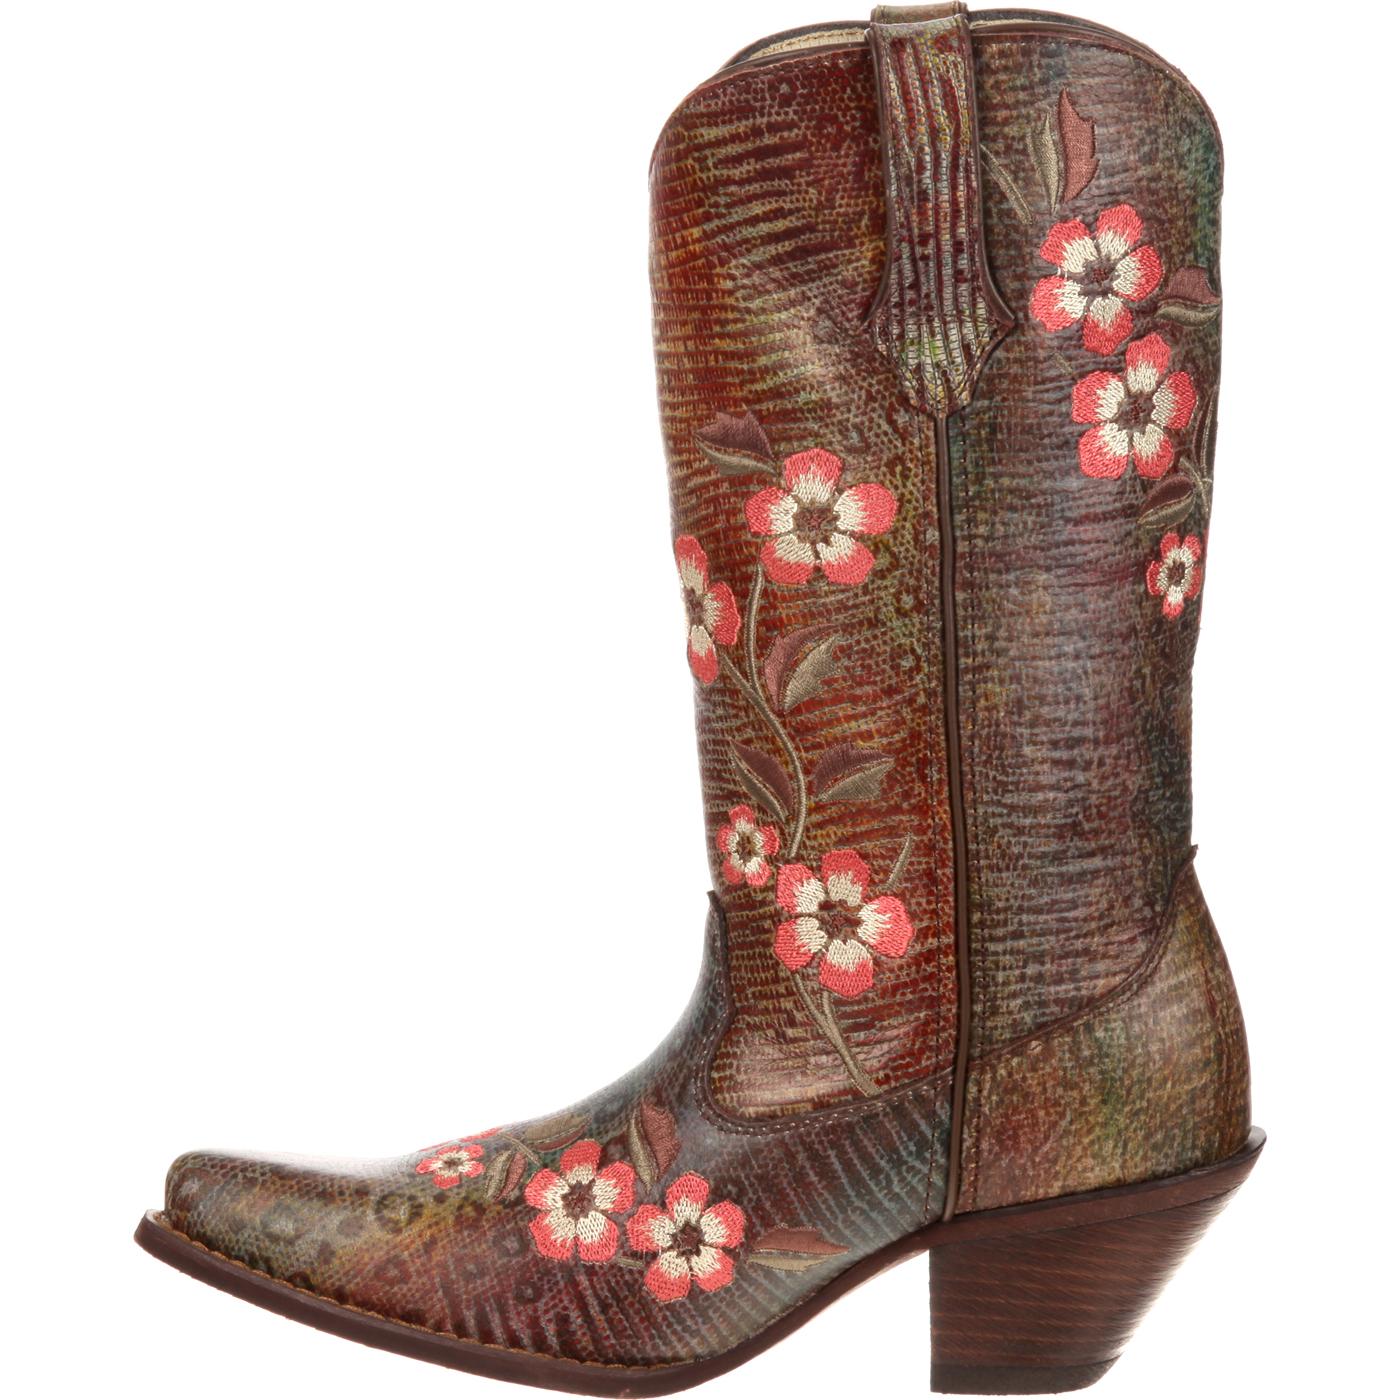 Crush by Durango - Women's Flower Leopard Western Boots